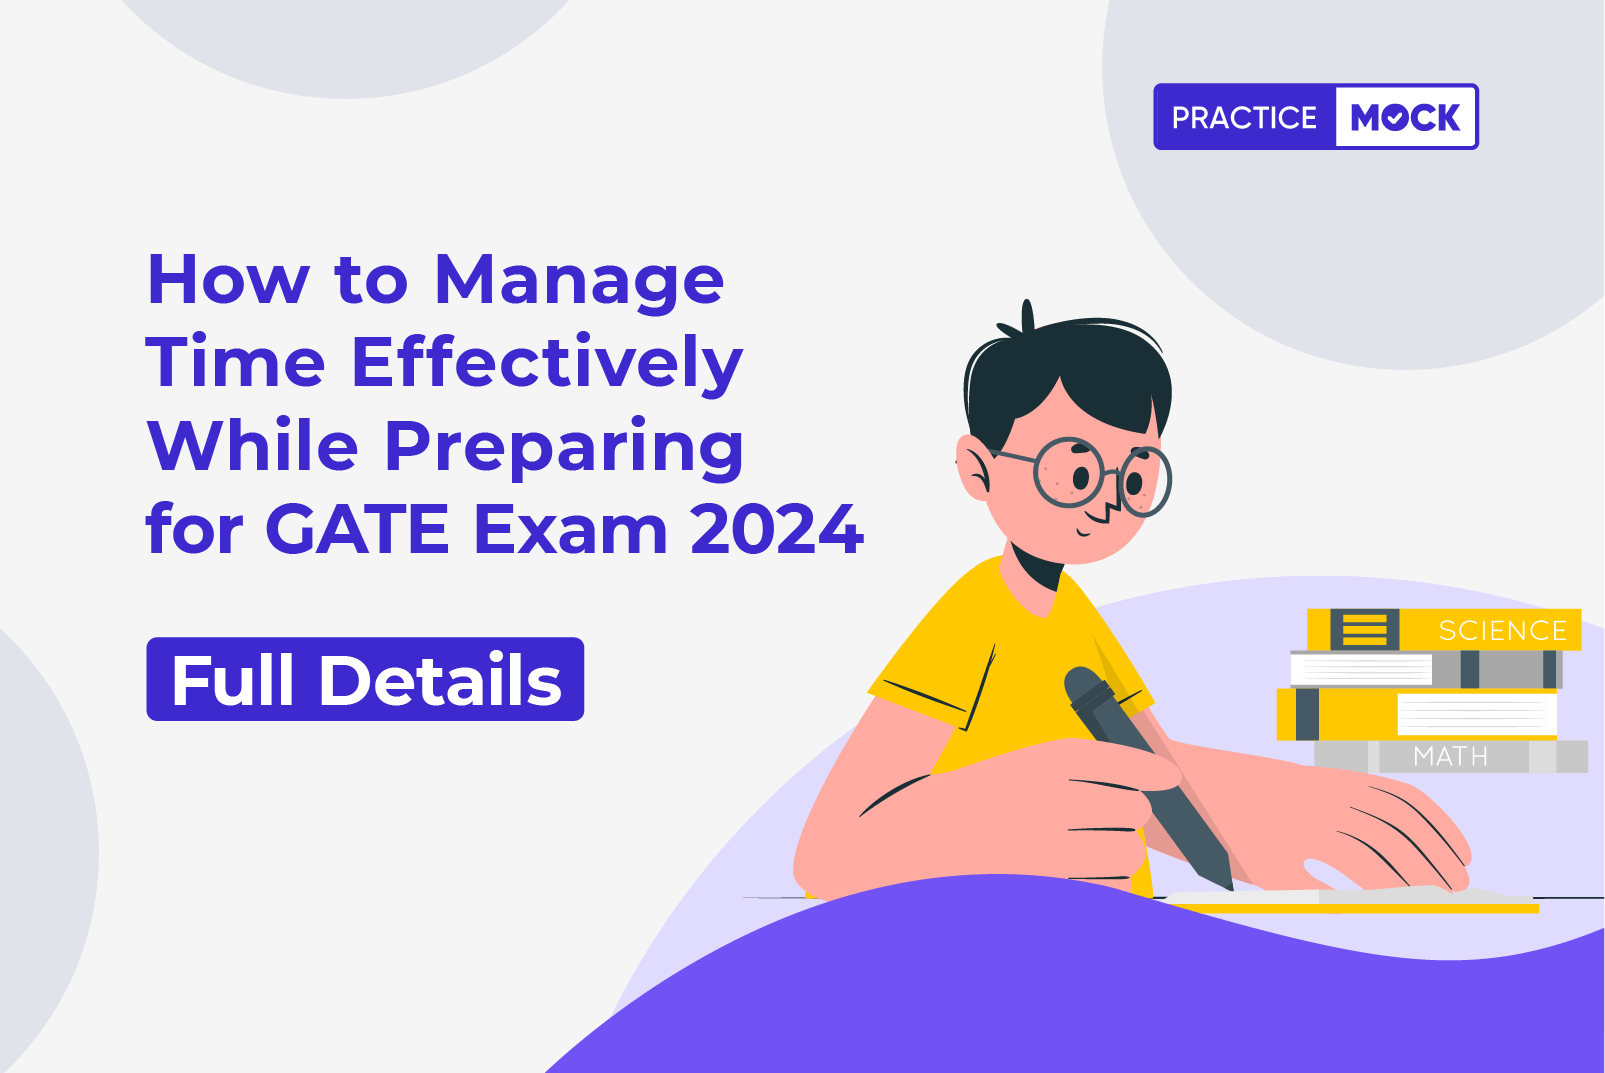 FI_GATE_Exam_Preparing_